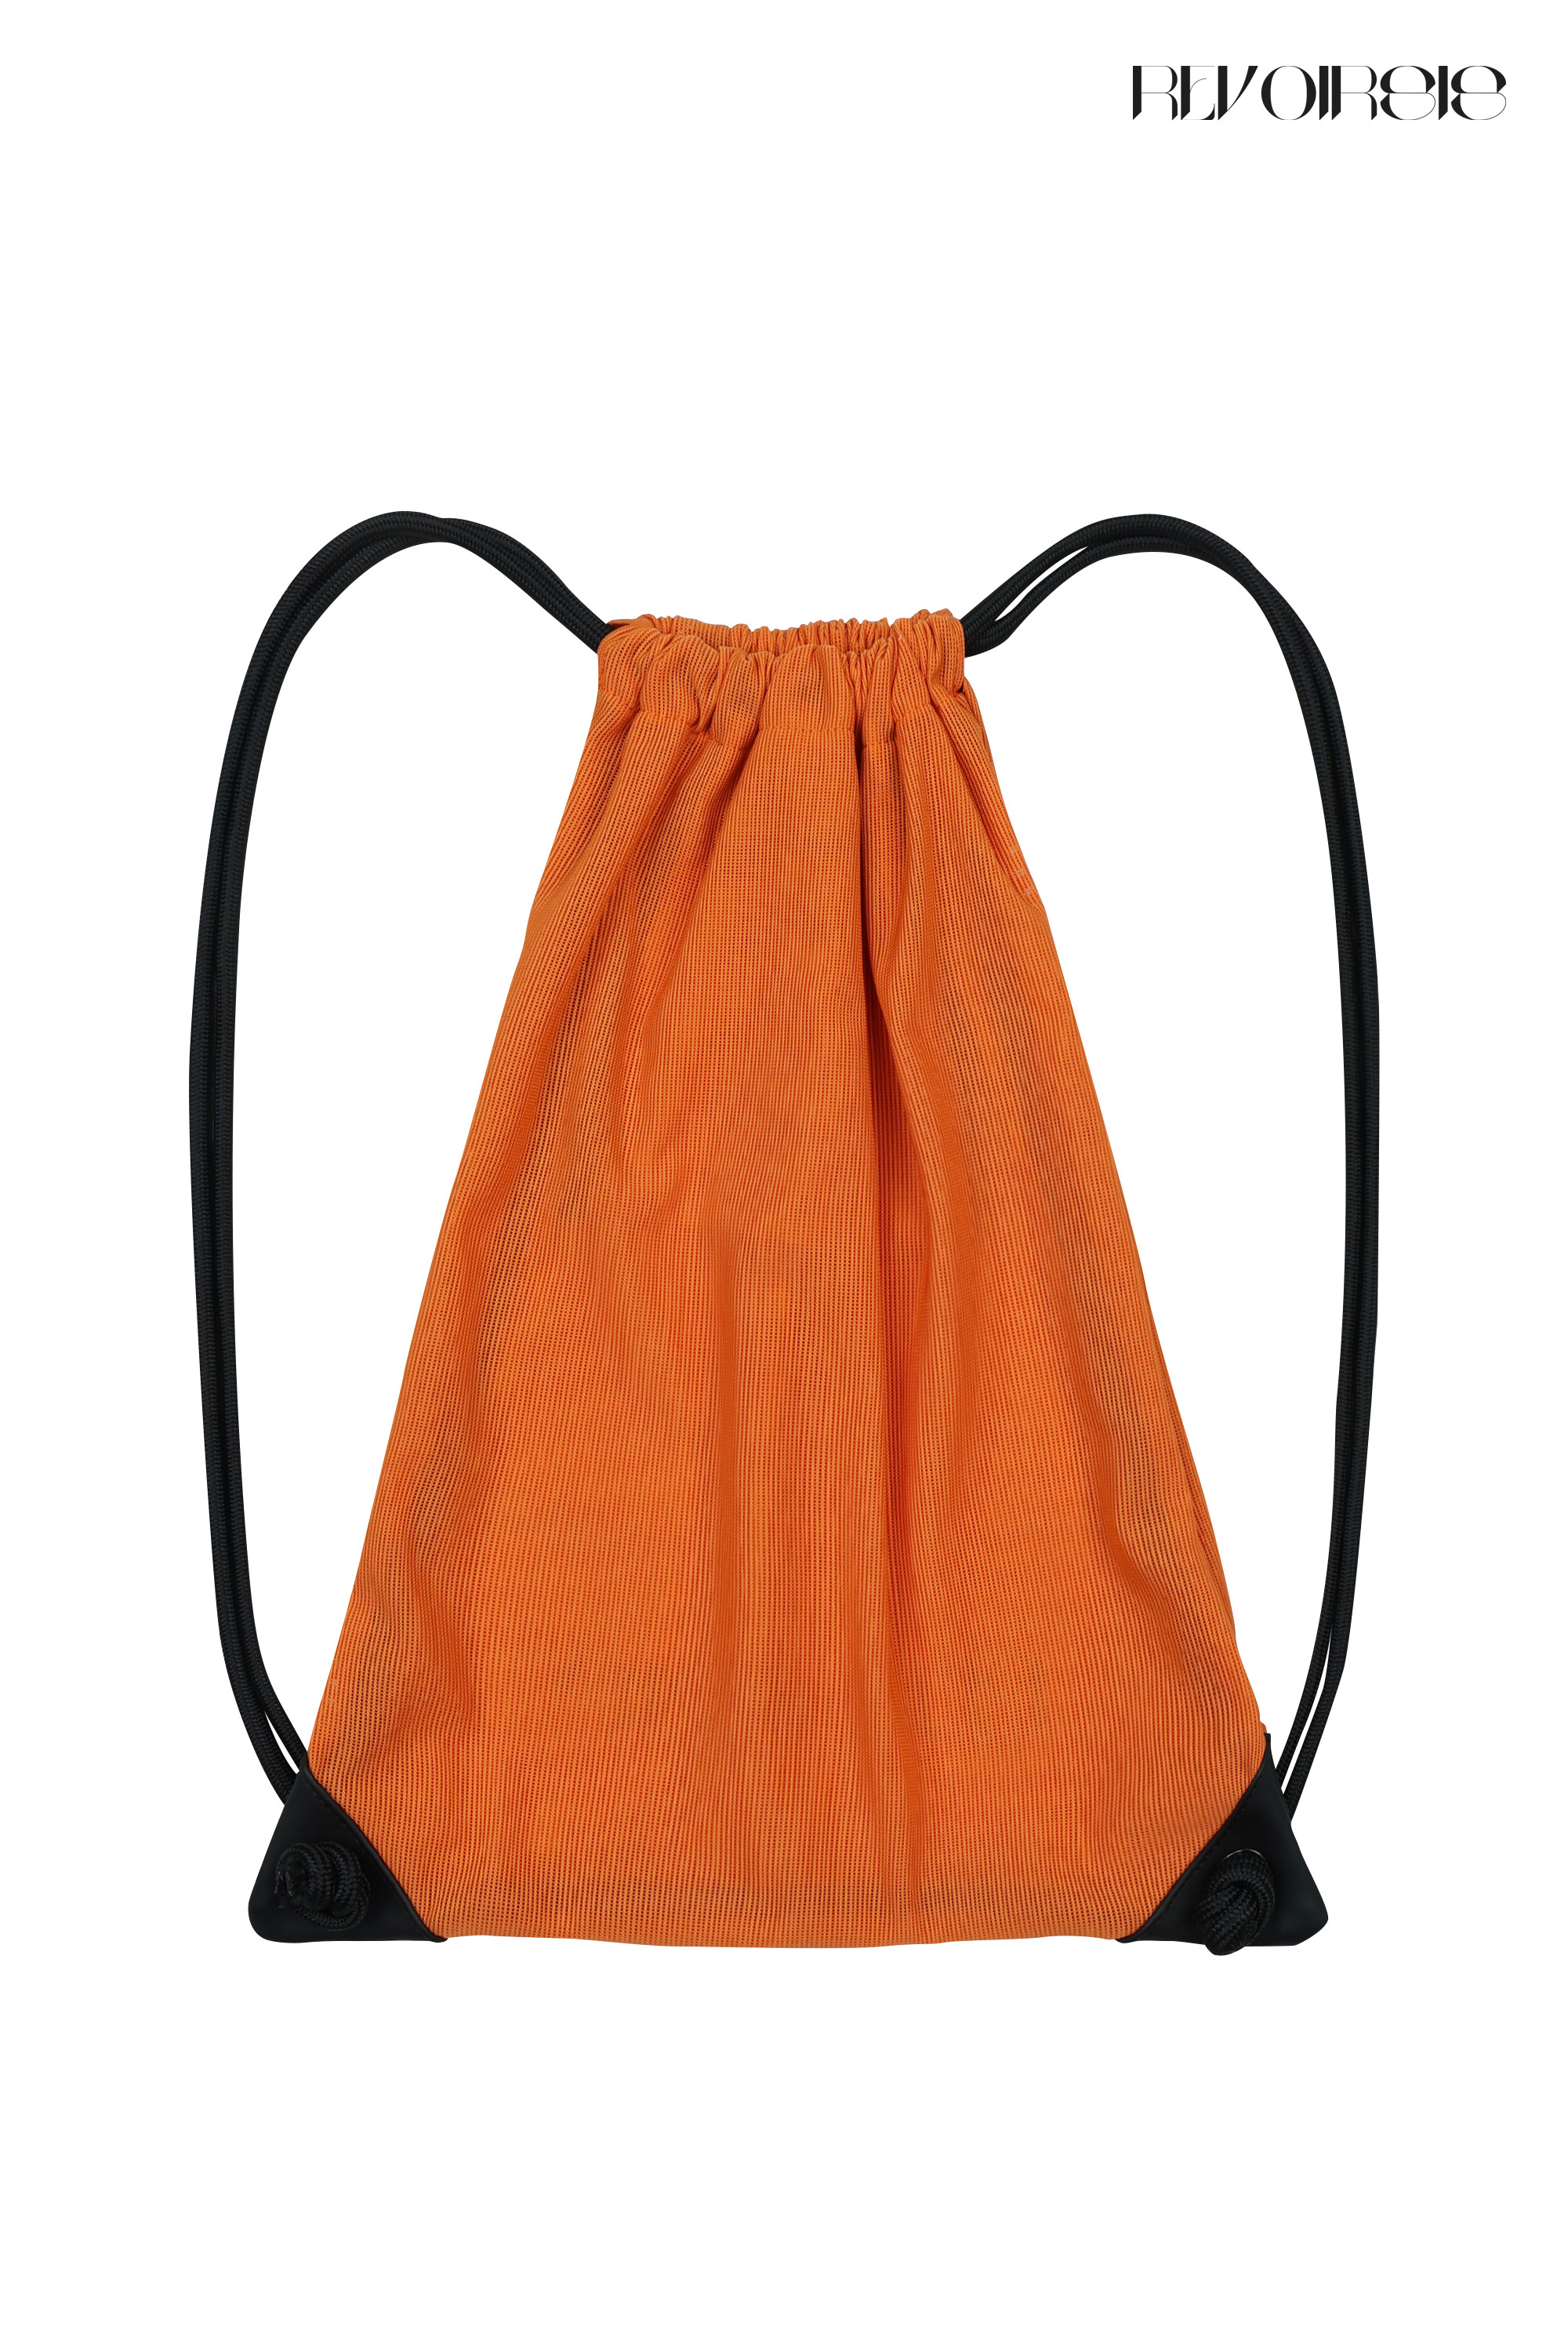 RVIS-mesh-backpack-orange-2.jpg